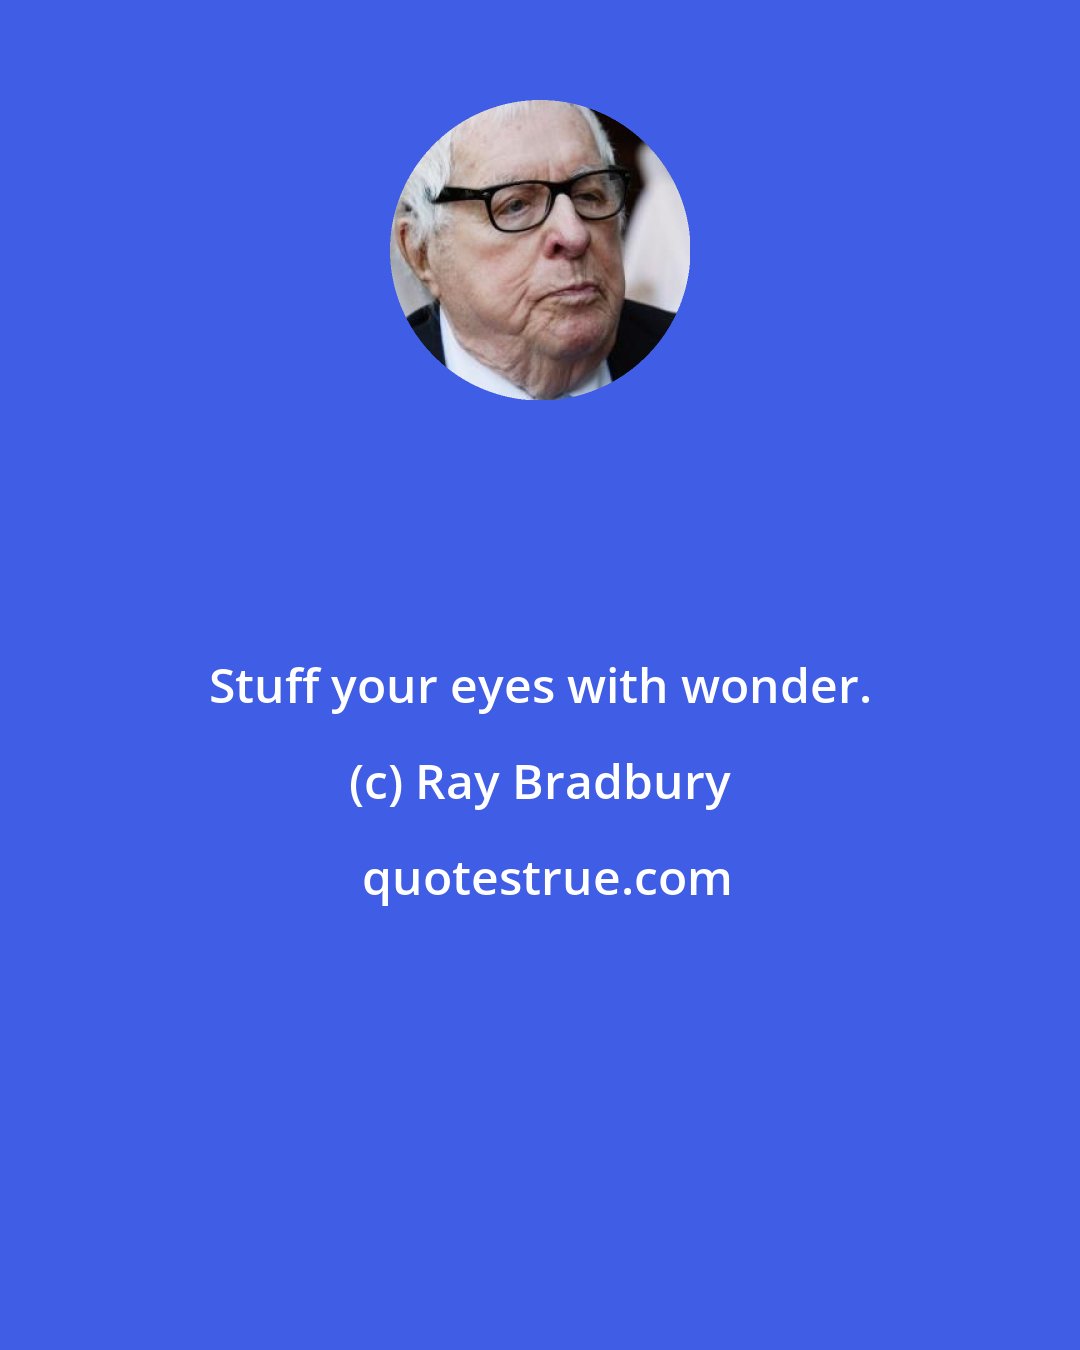 Ray Bradbury: Stuff your eyes with wonder.